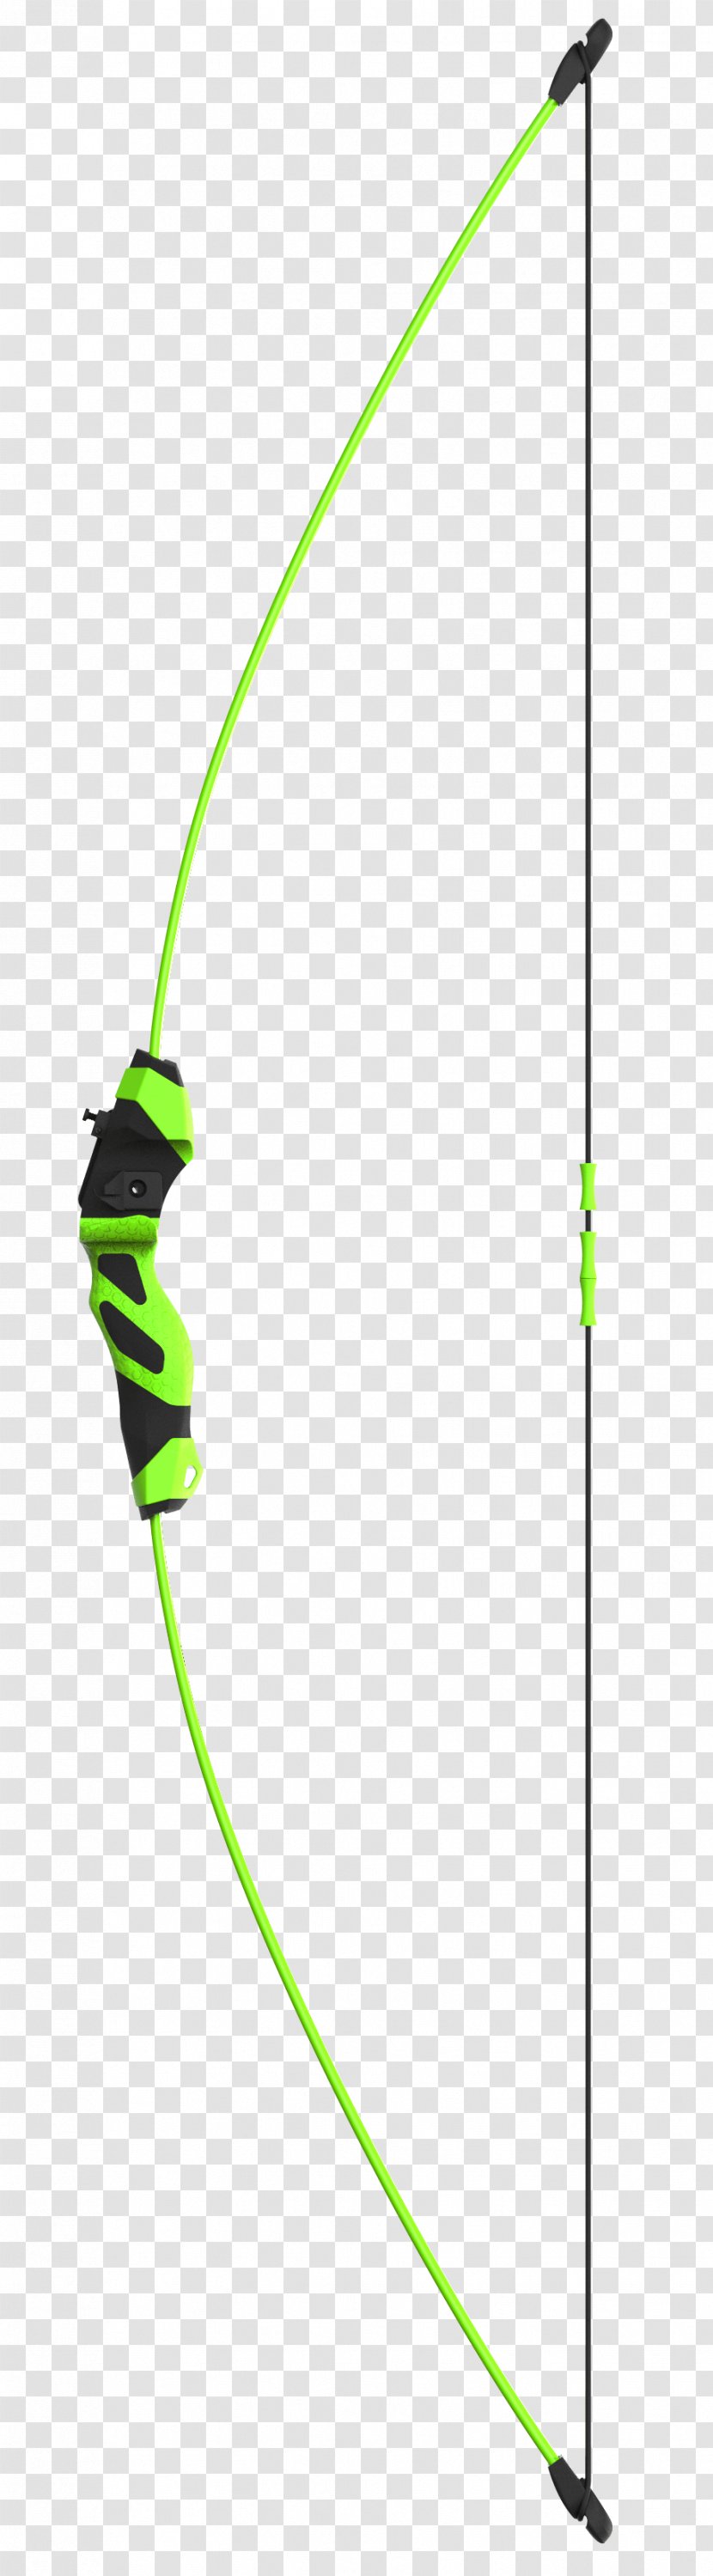 Bow And Arrow Archery Recurve Transparent PNG